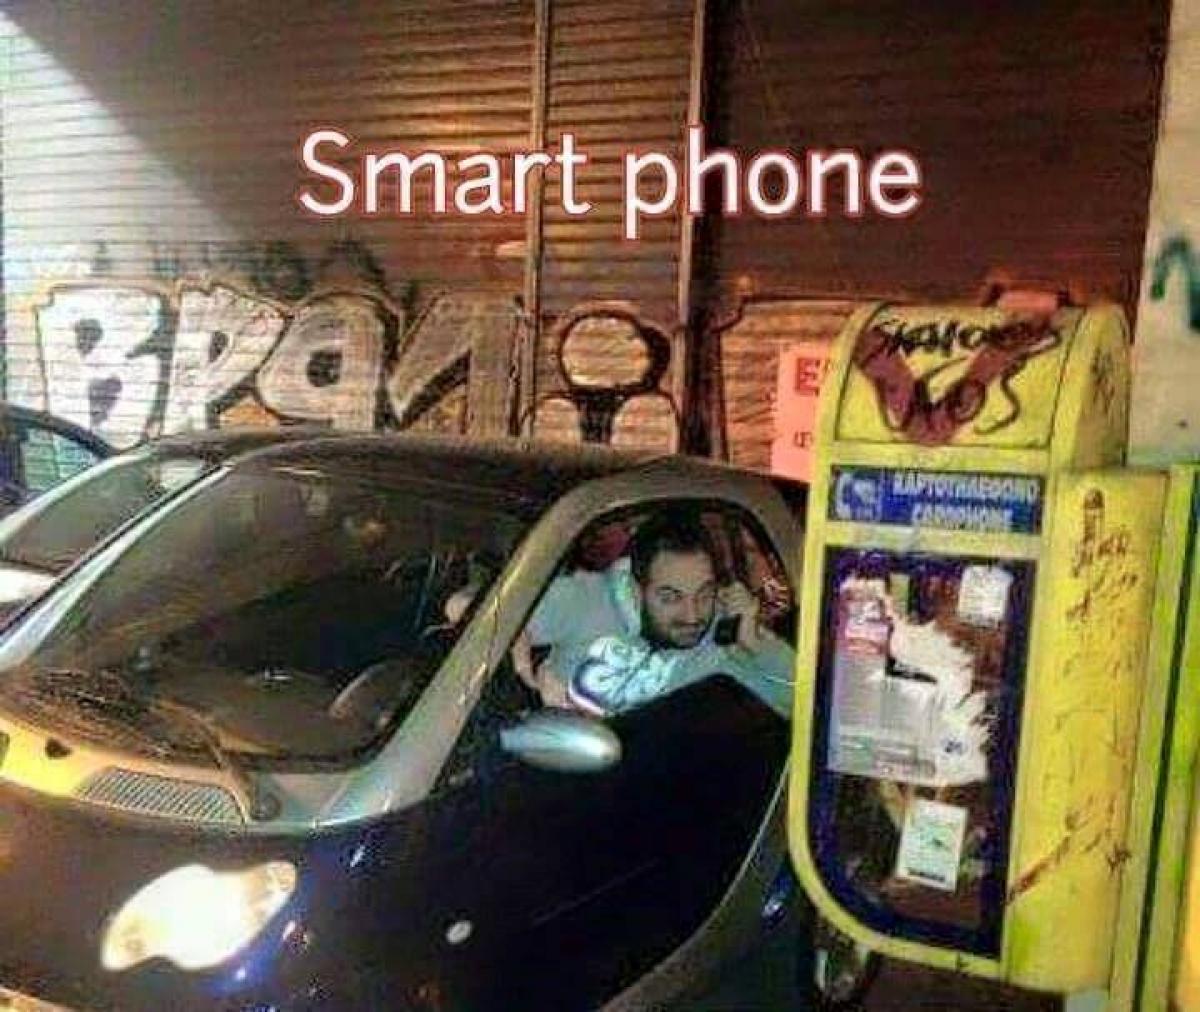 Smart phone